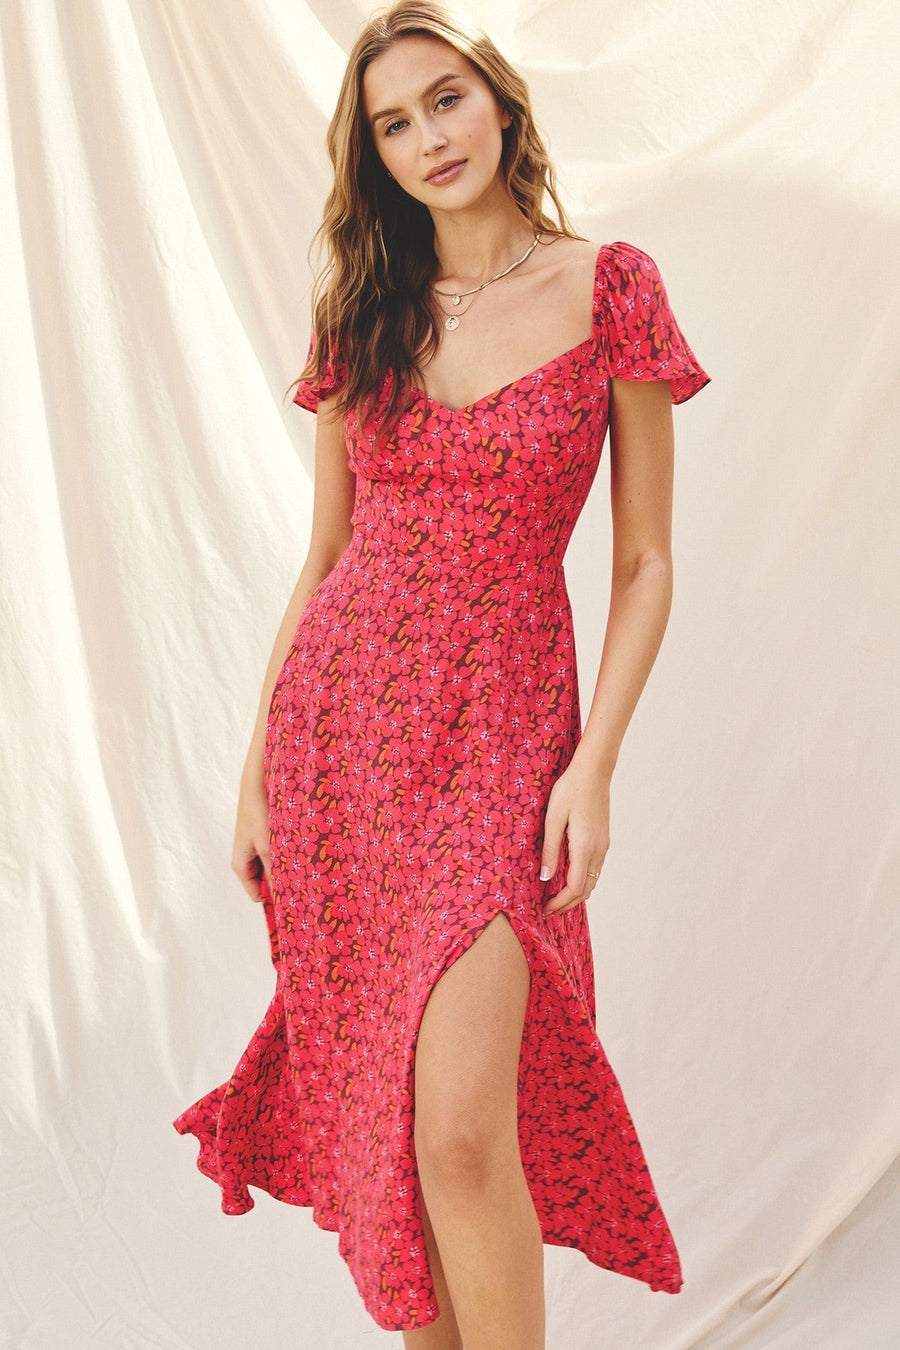 Pinkberry Maxi Dress General Dress Forum 